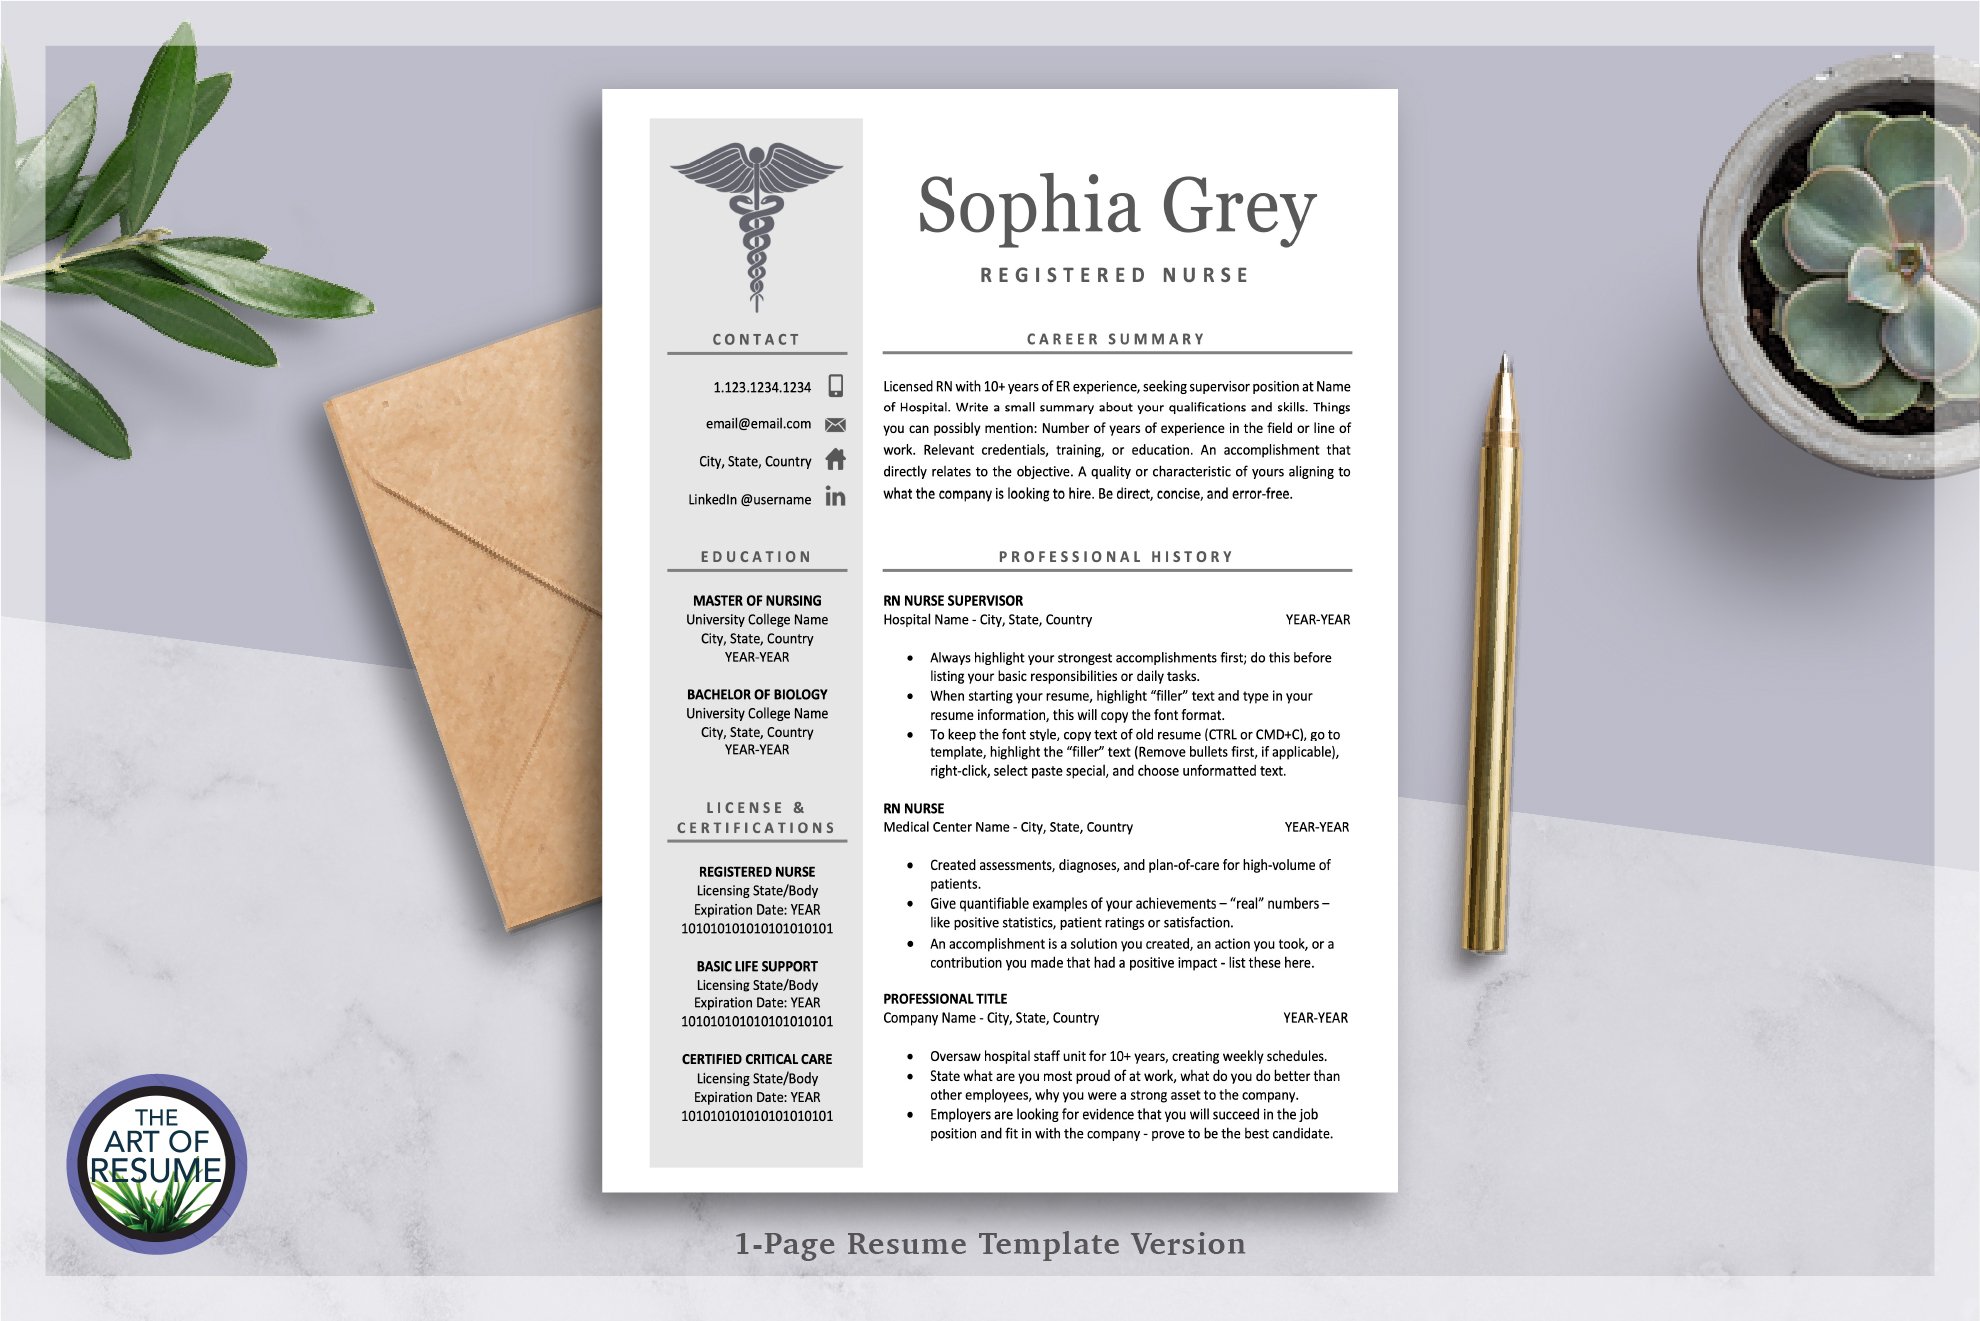 Nursing Medical Resume CV Template preview image.